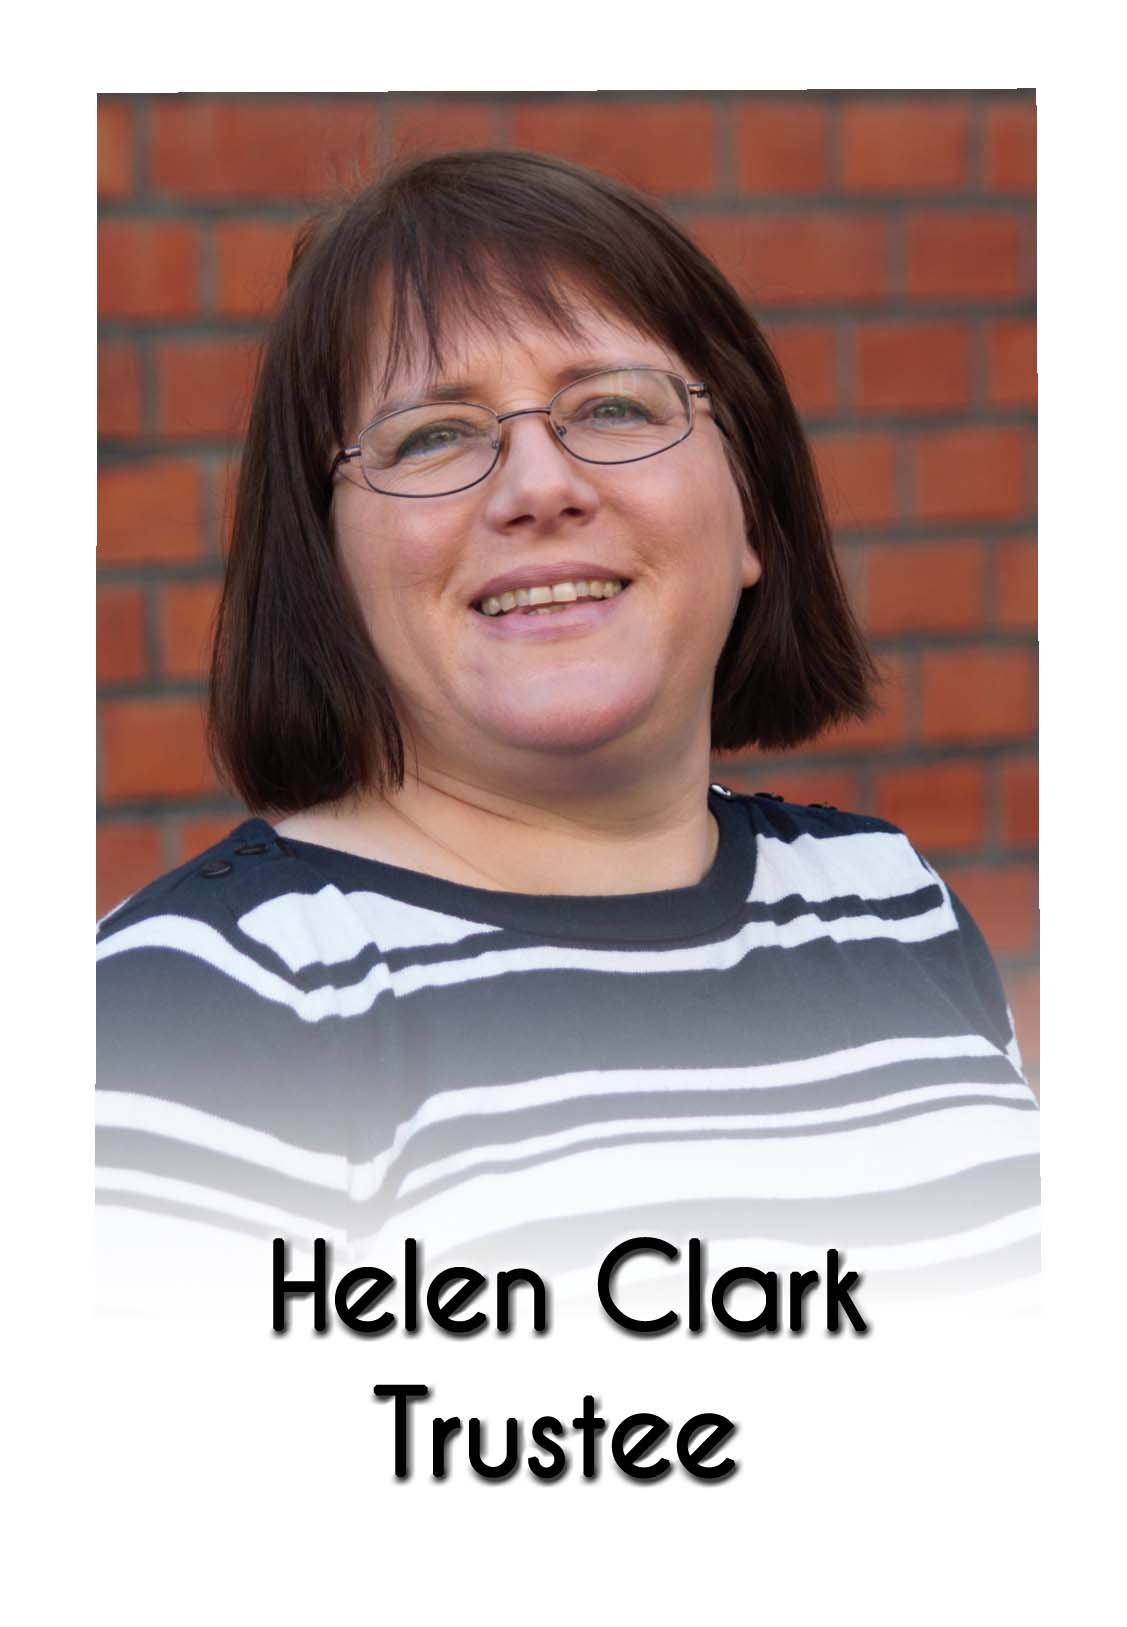 Helen Clark labelled